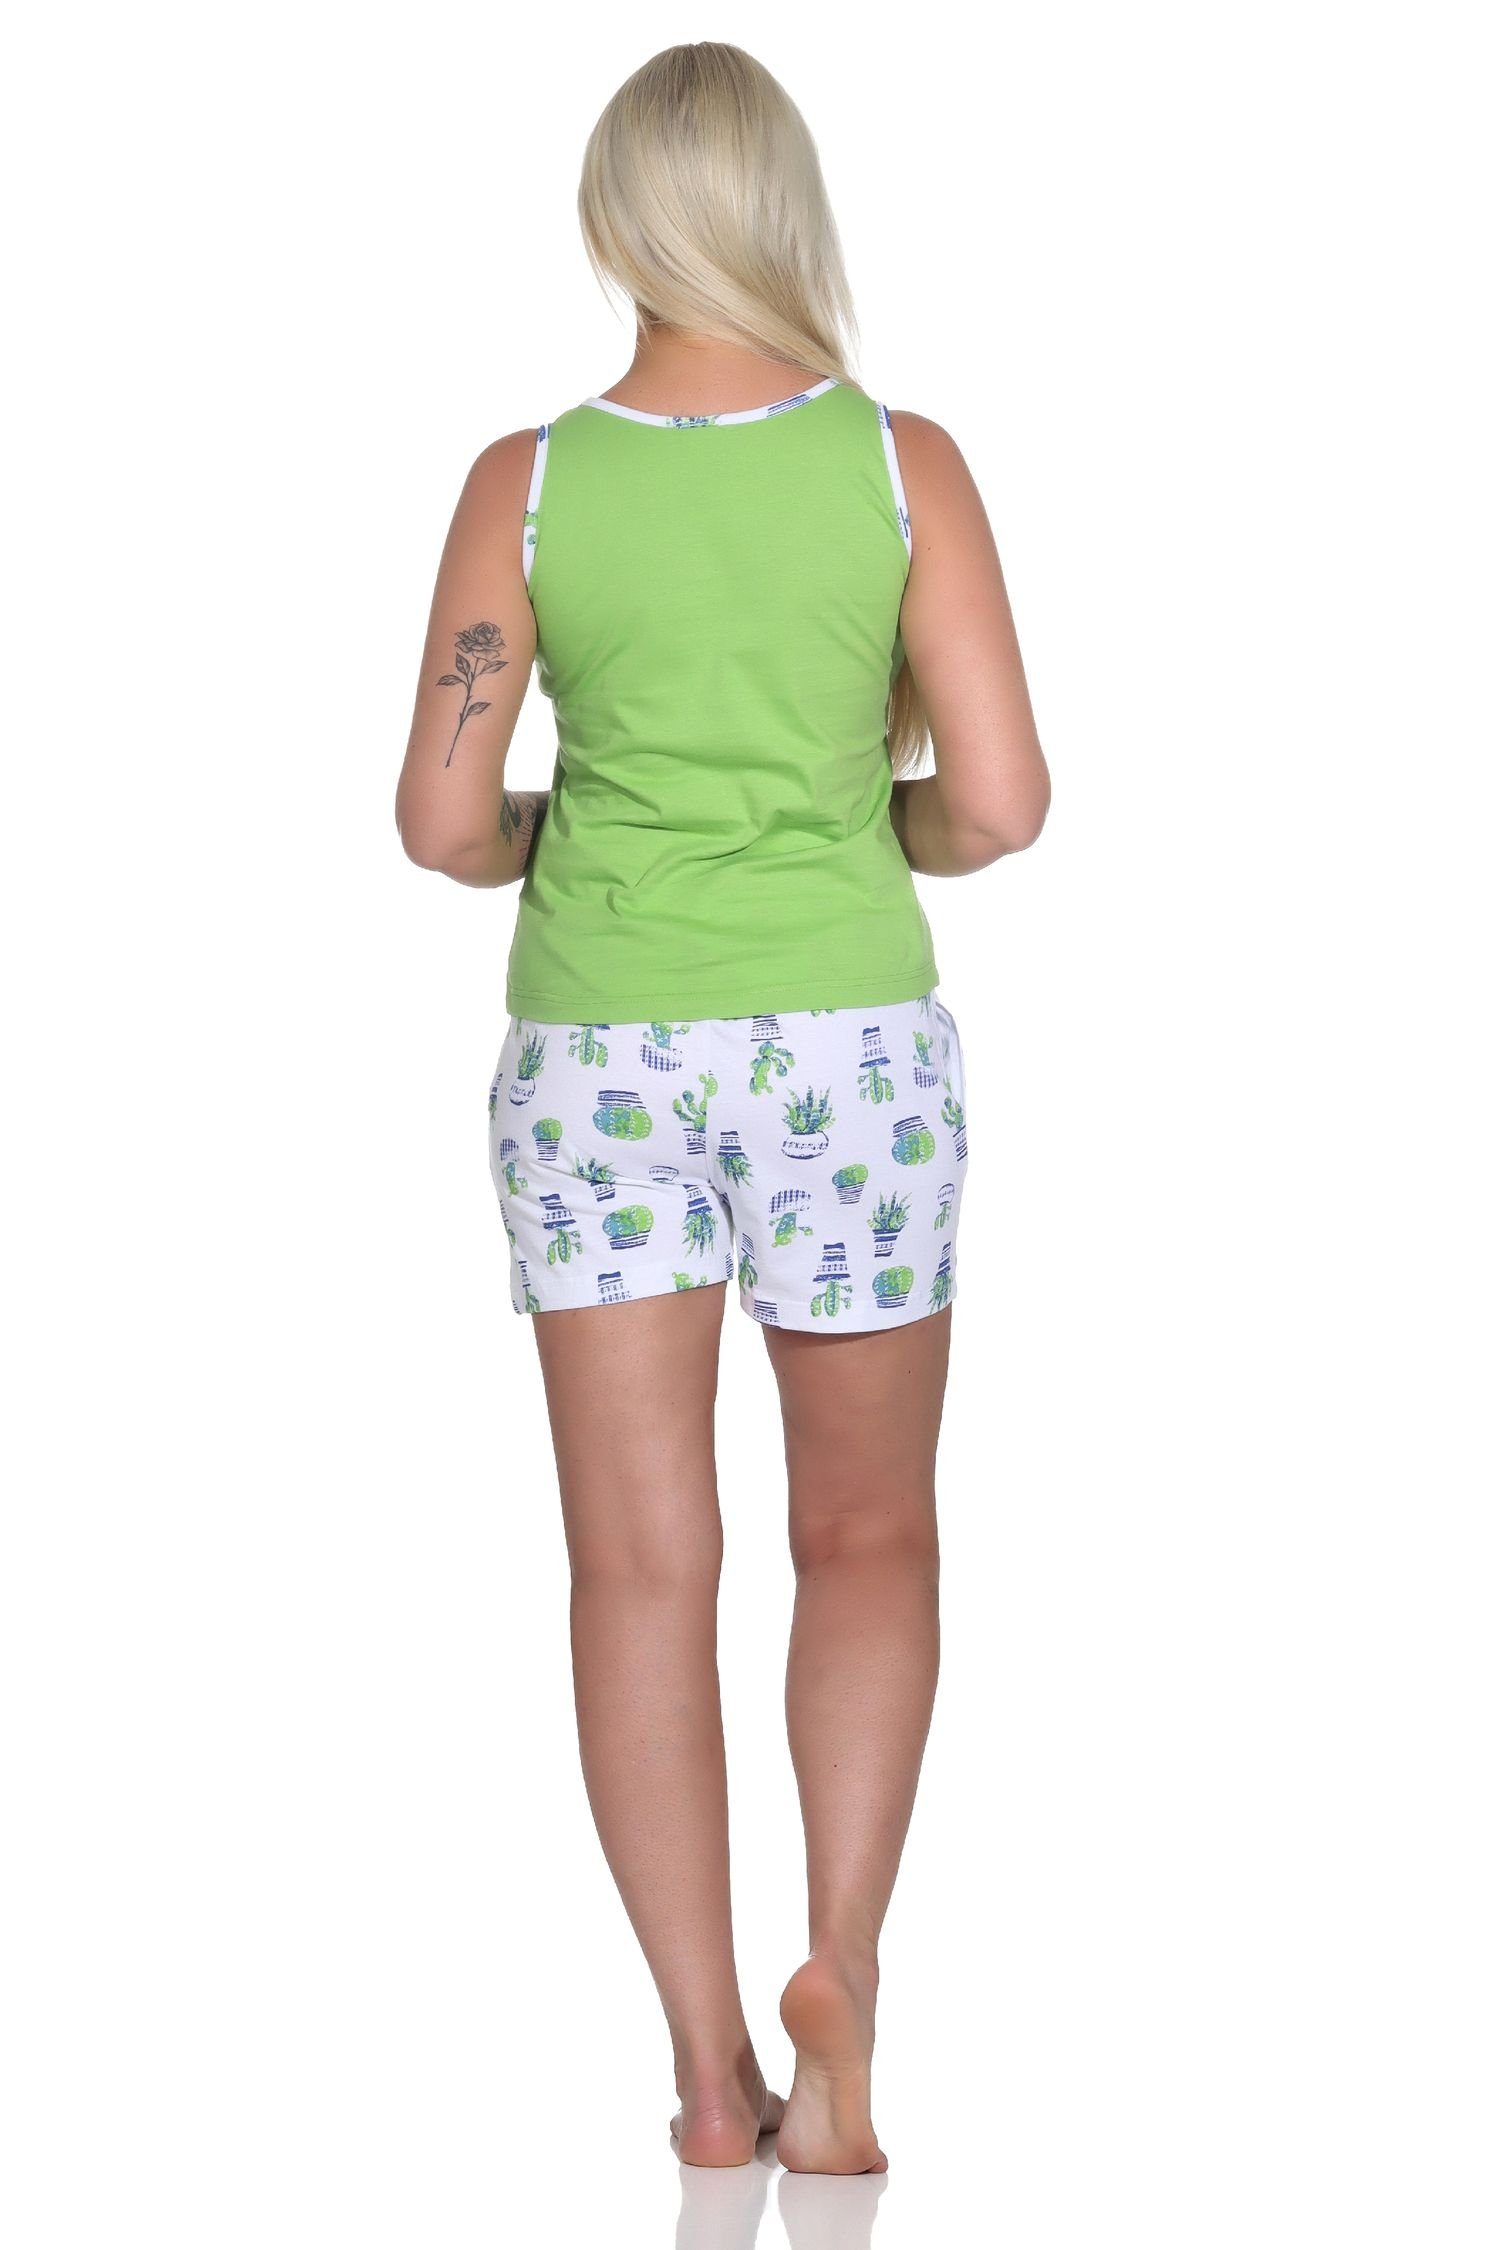 Normann Damen mit Ärmelloser Pyjama grün Pyjama Kaktus als Schlafanzug Shorty Motiv